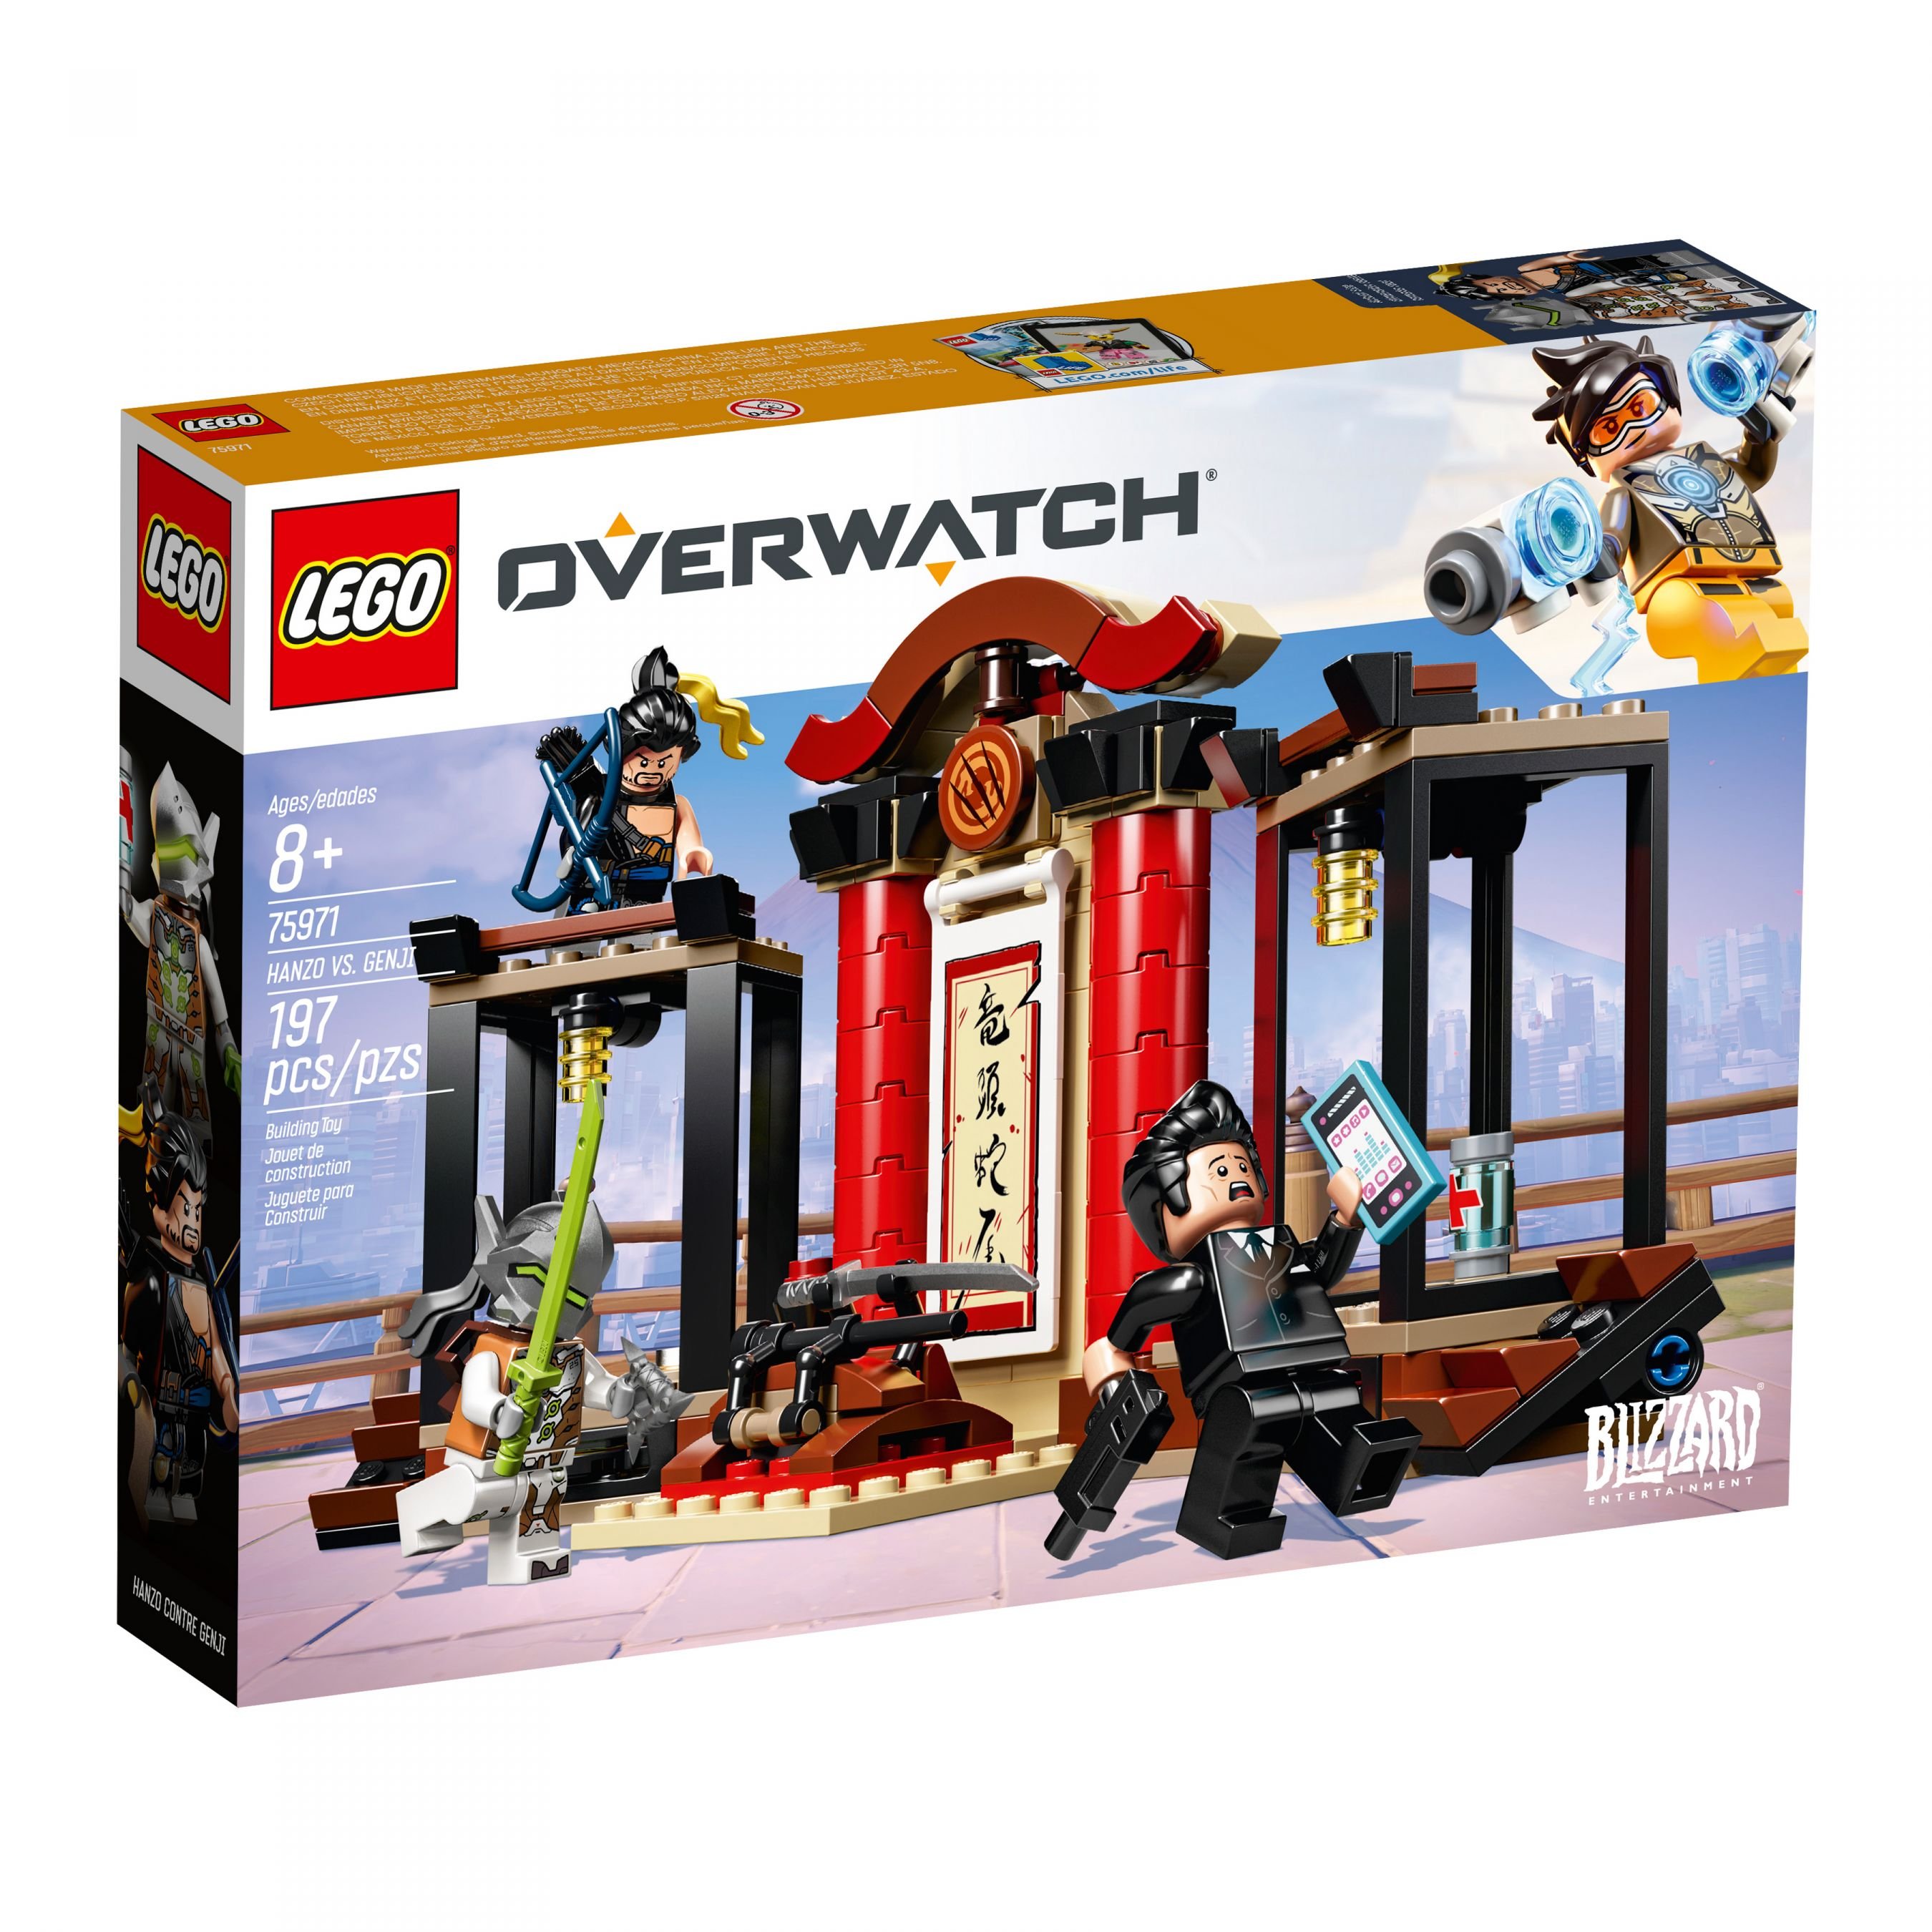 LEGO Overwatch 75971 Hanzo vs. Genji LEGO_75971_alt1.jpg